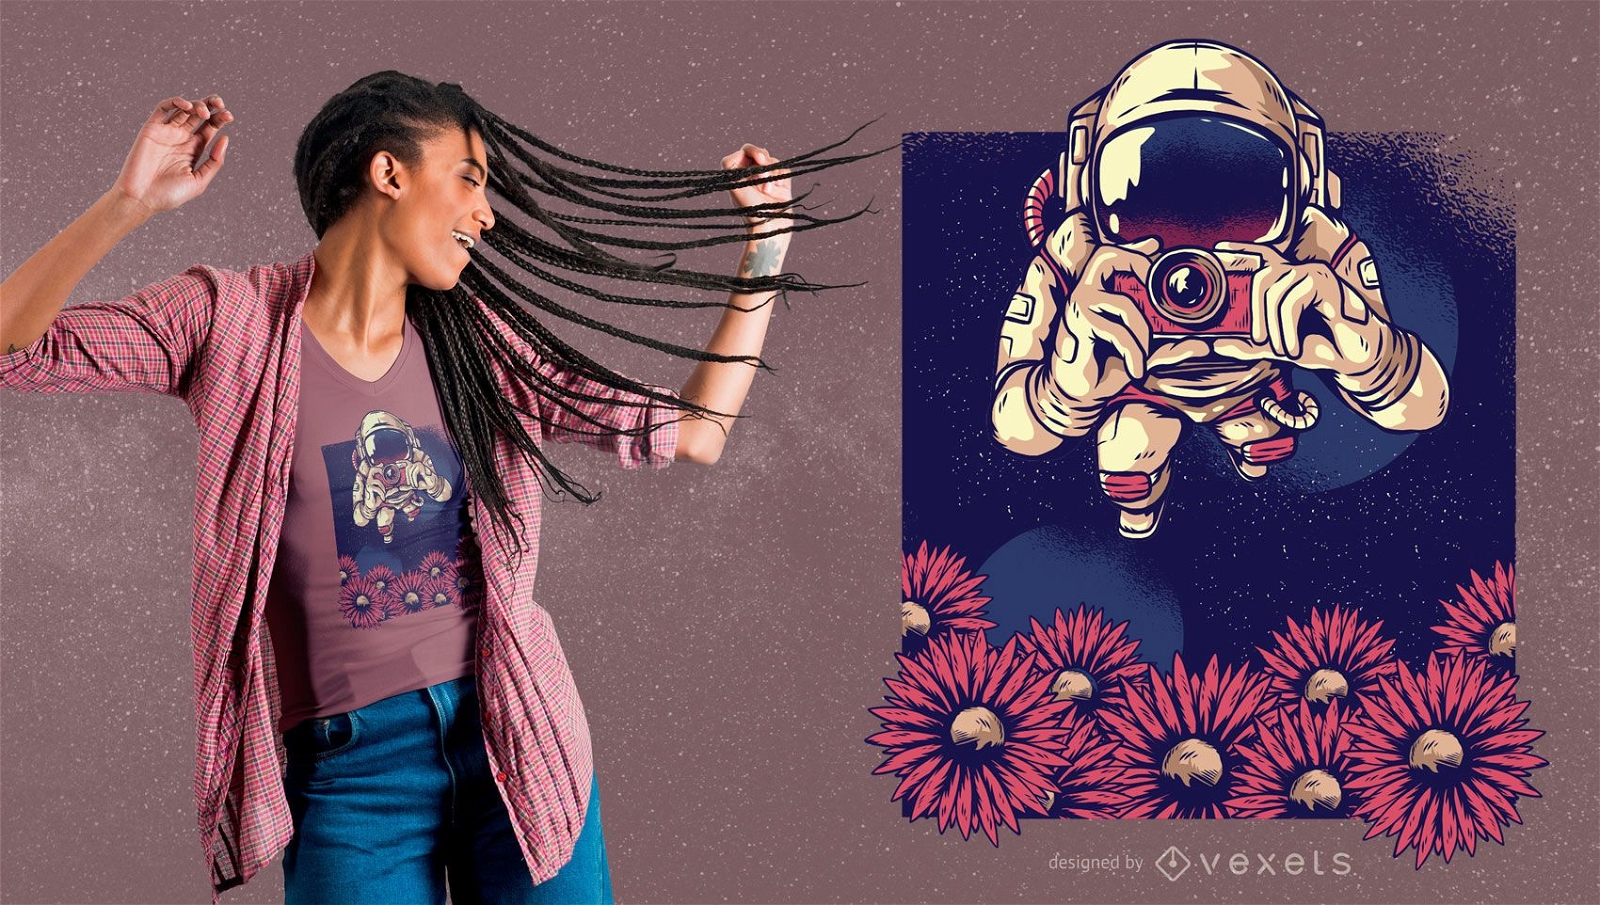 Floral Astronaut Fotograf T-Shirt Design